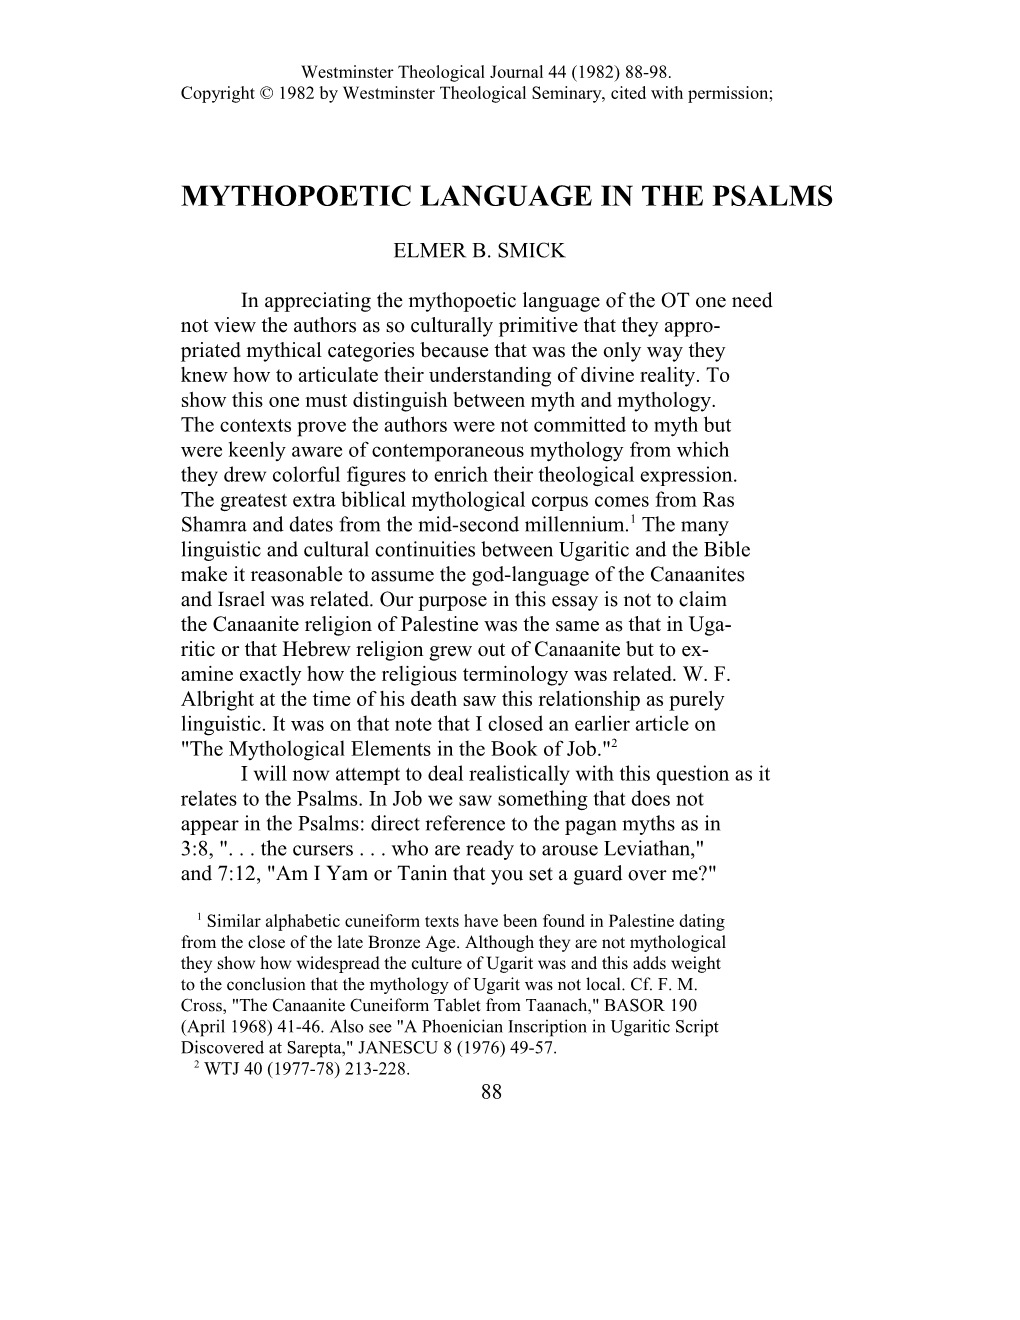 Mythopoetic Language in the Psalms